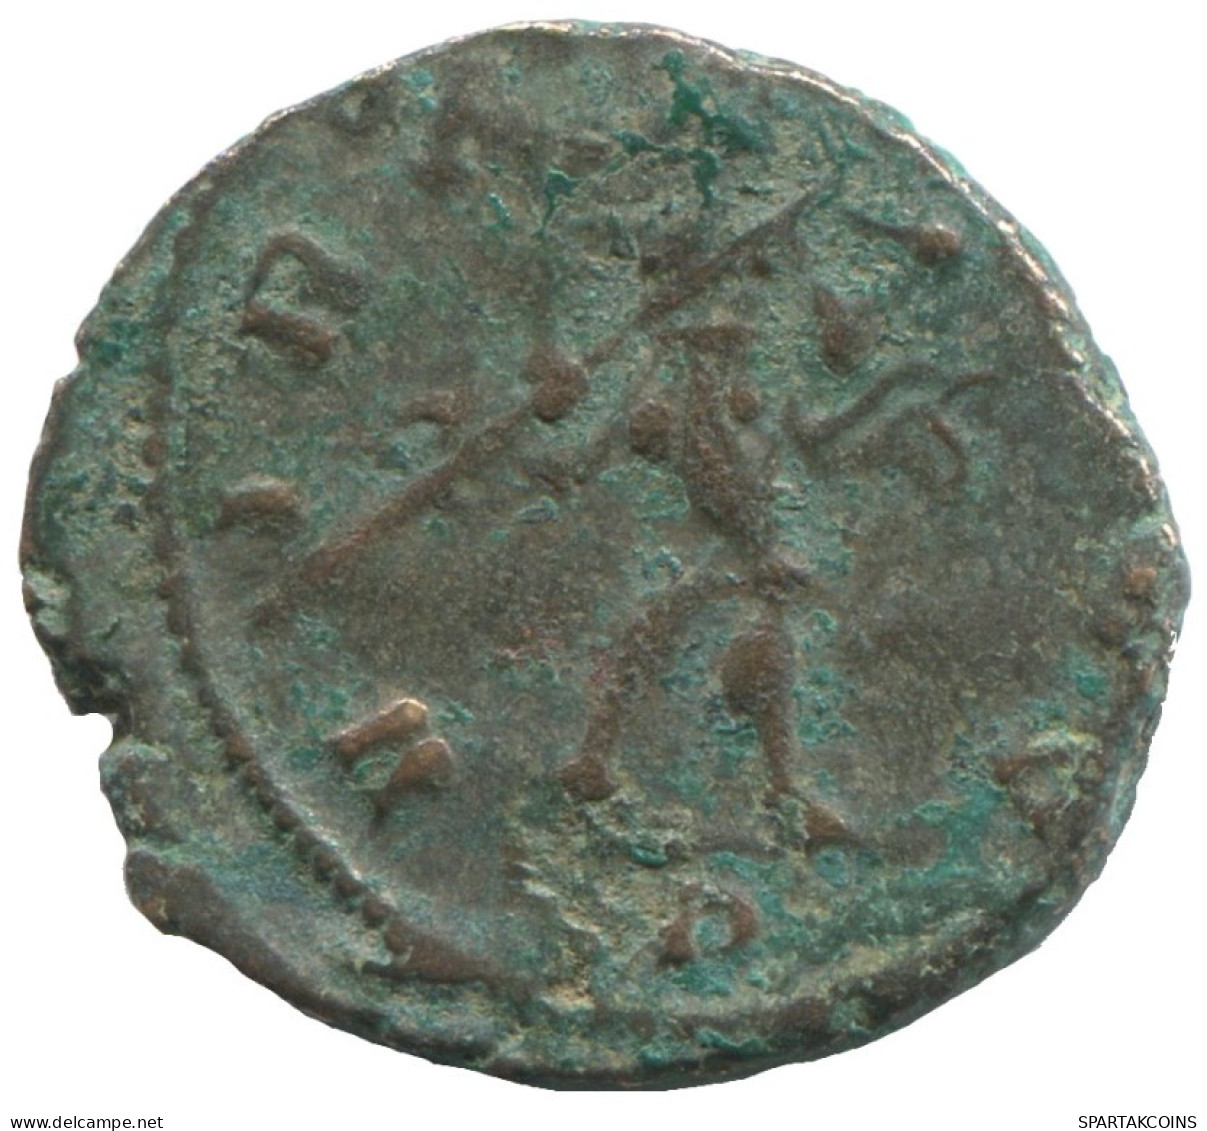 CLAUDIUS II Antike RÖMISCHEN KAISERZEIT Münze 2.8g/20mm #ANN1187.15.D.A - La Crisi Militare (235 / 284)